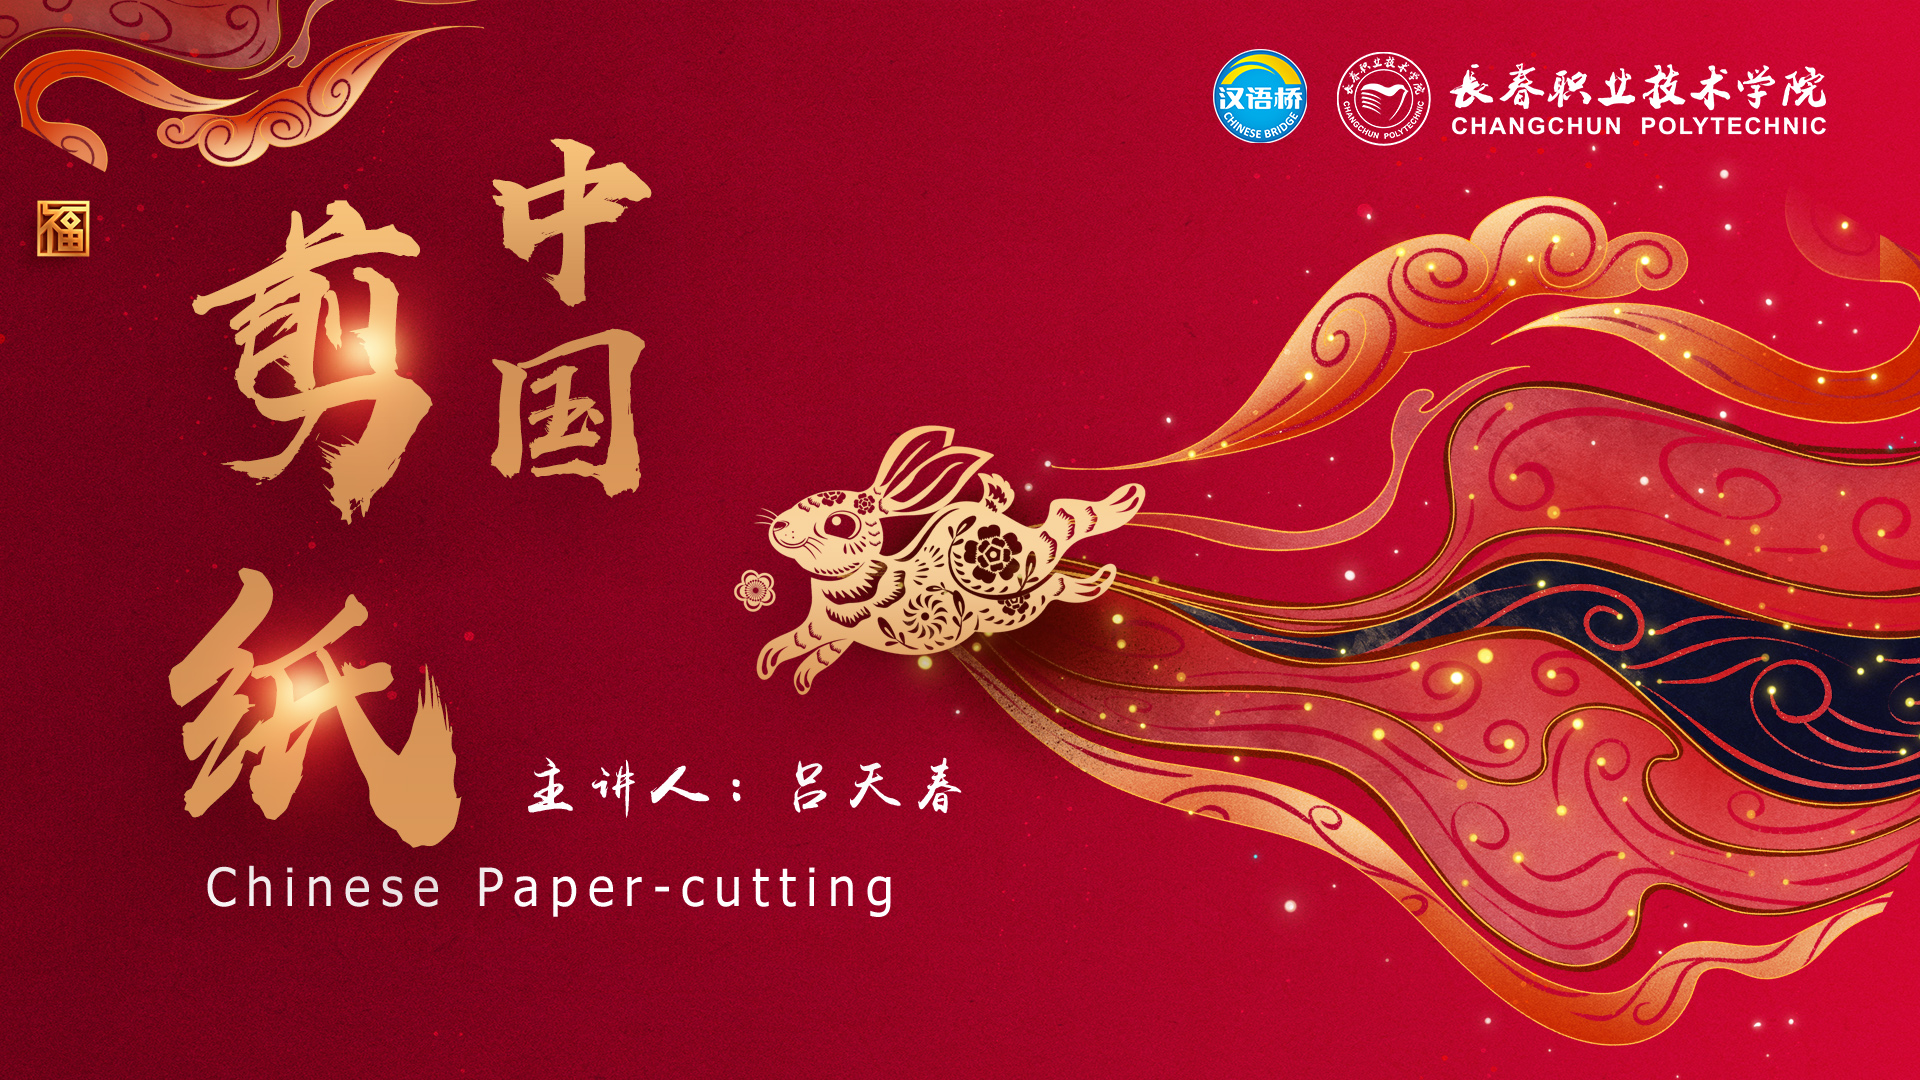 Manchu Paper-cutting